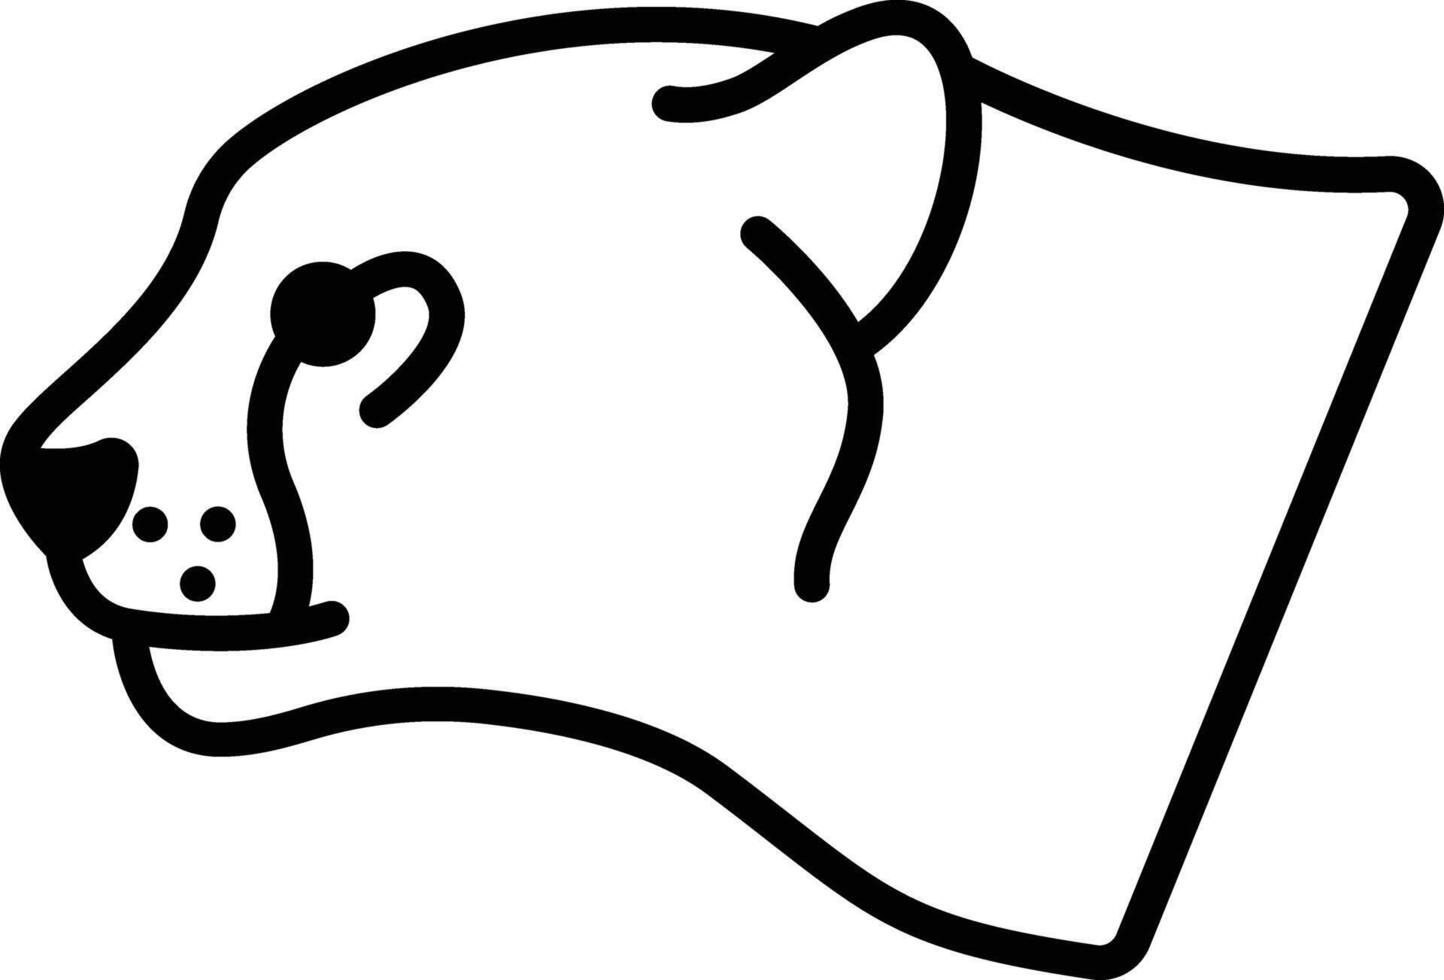 Jaguar face glyph and line vector illustration